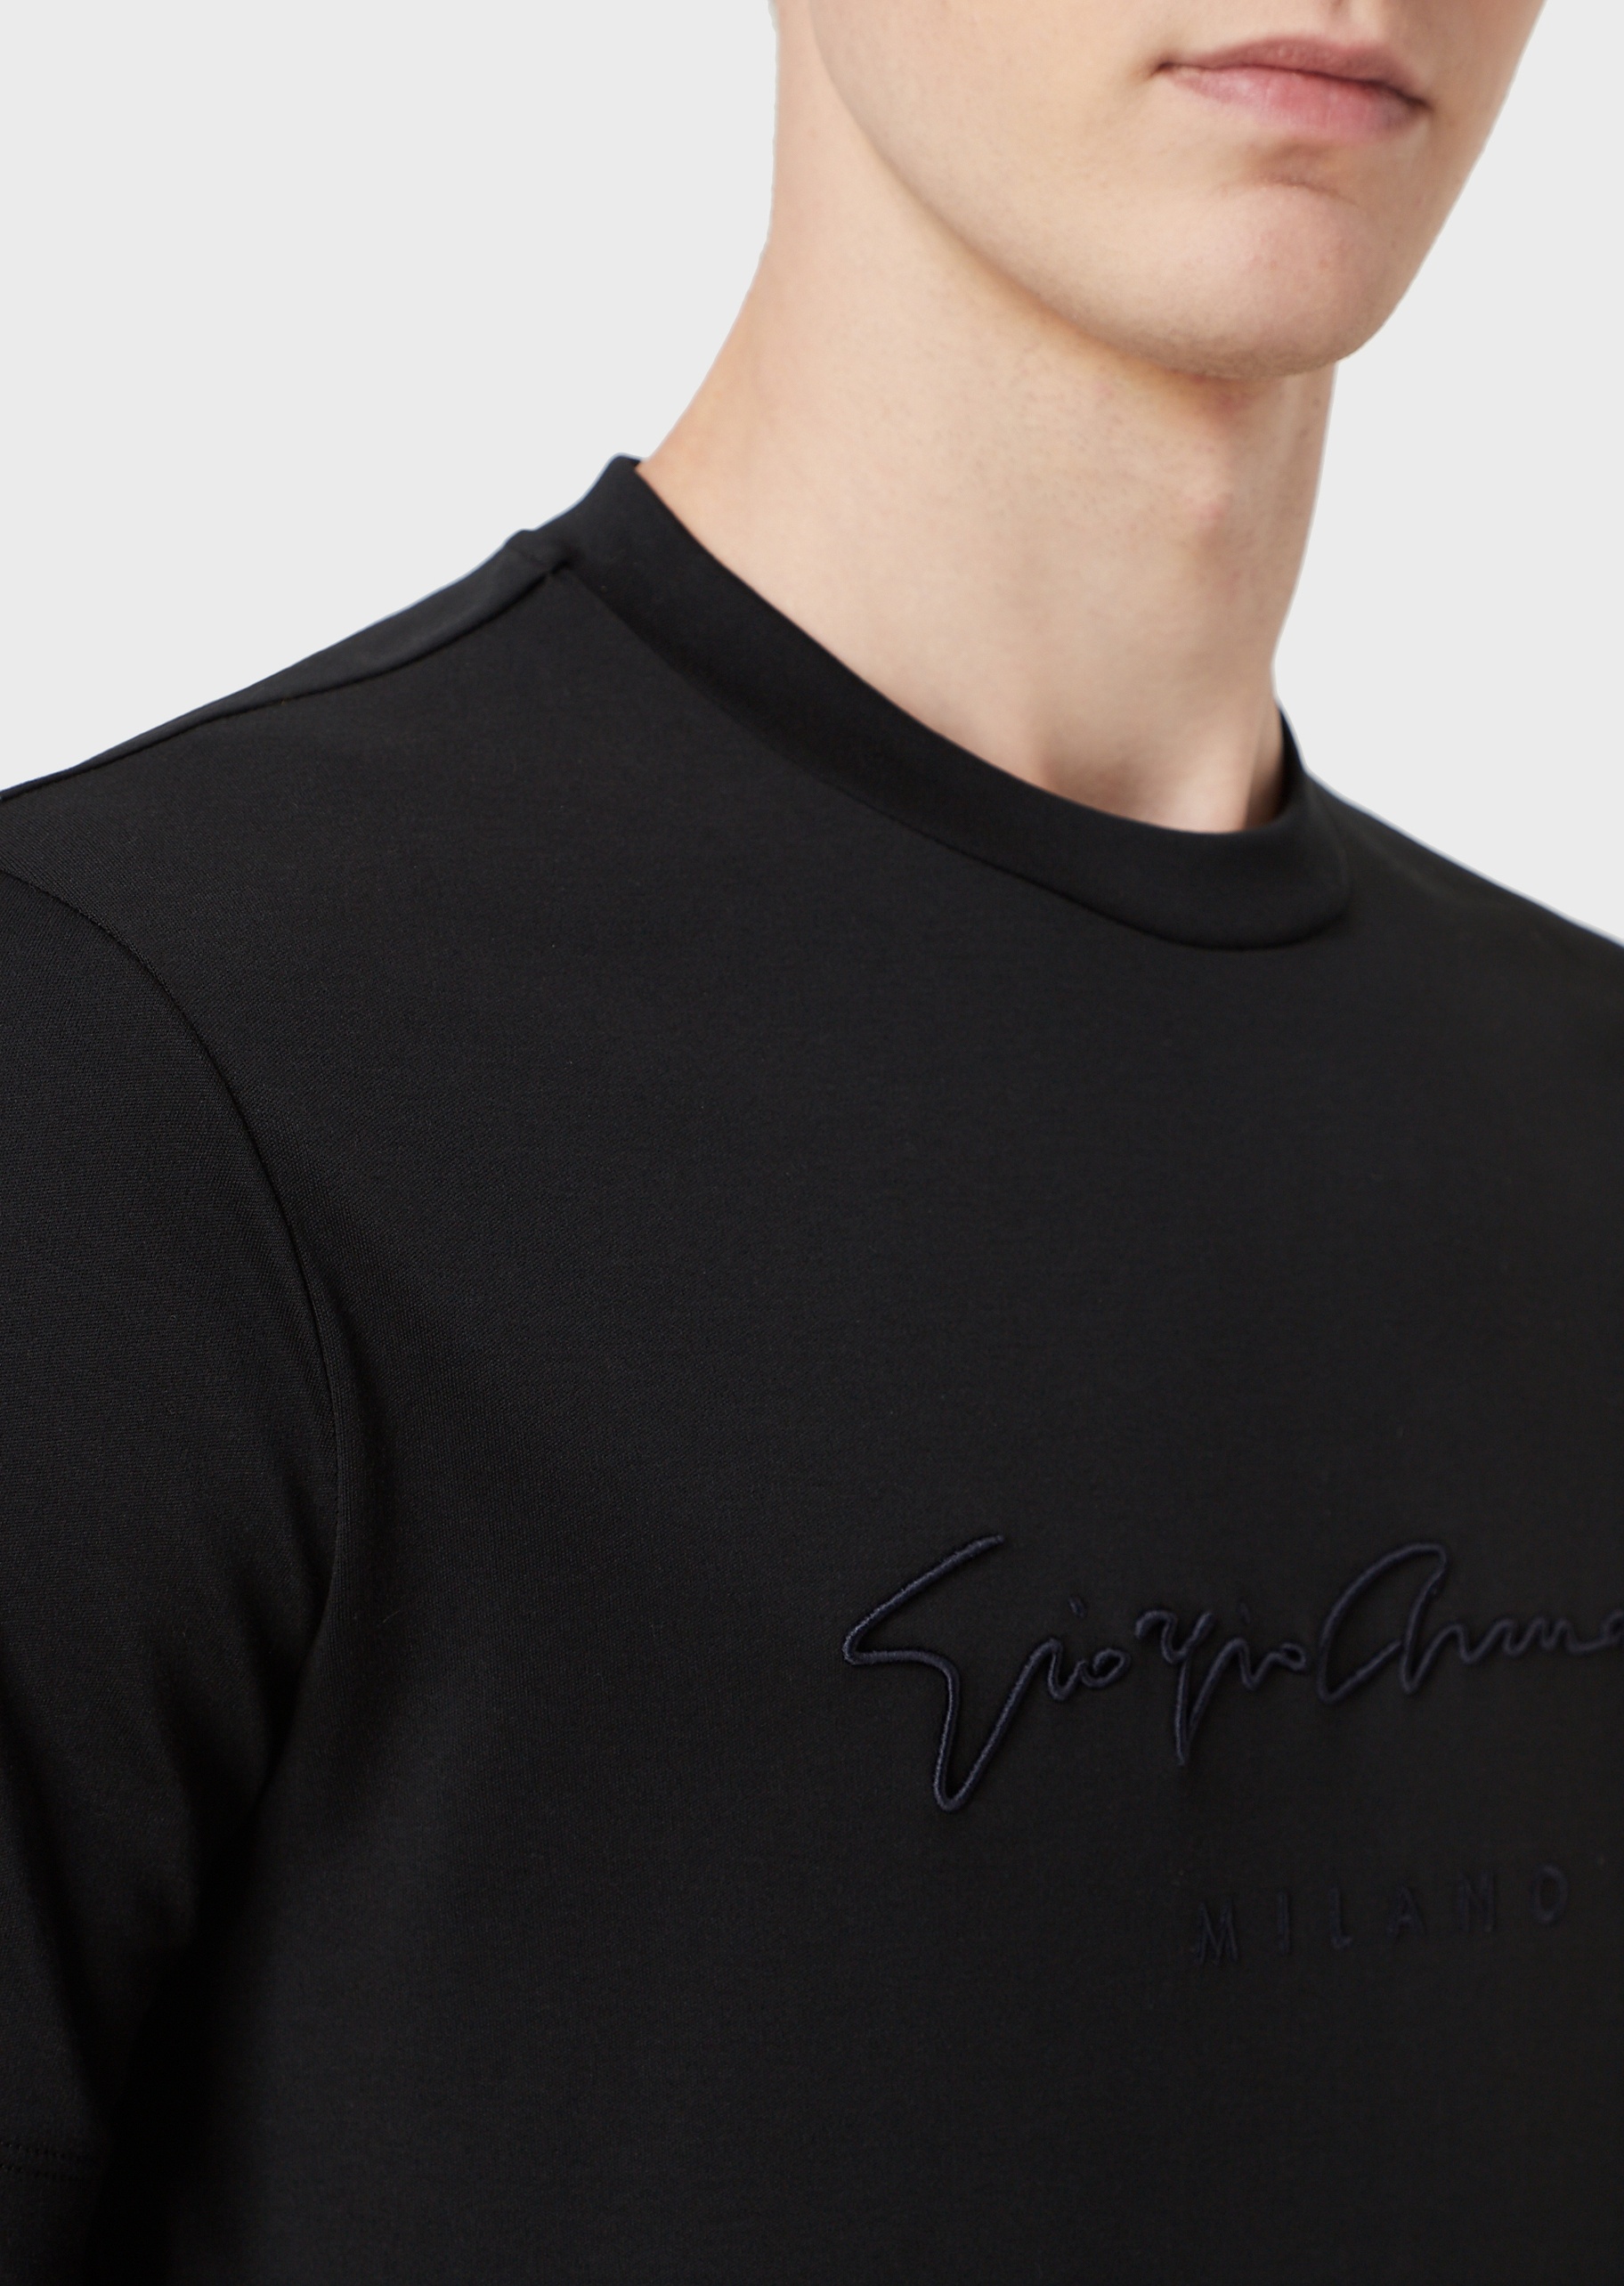 Giorgio Armani 男士立体LOGO全棉圆领短袖纯色T恤